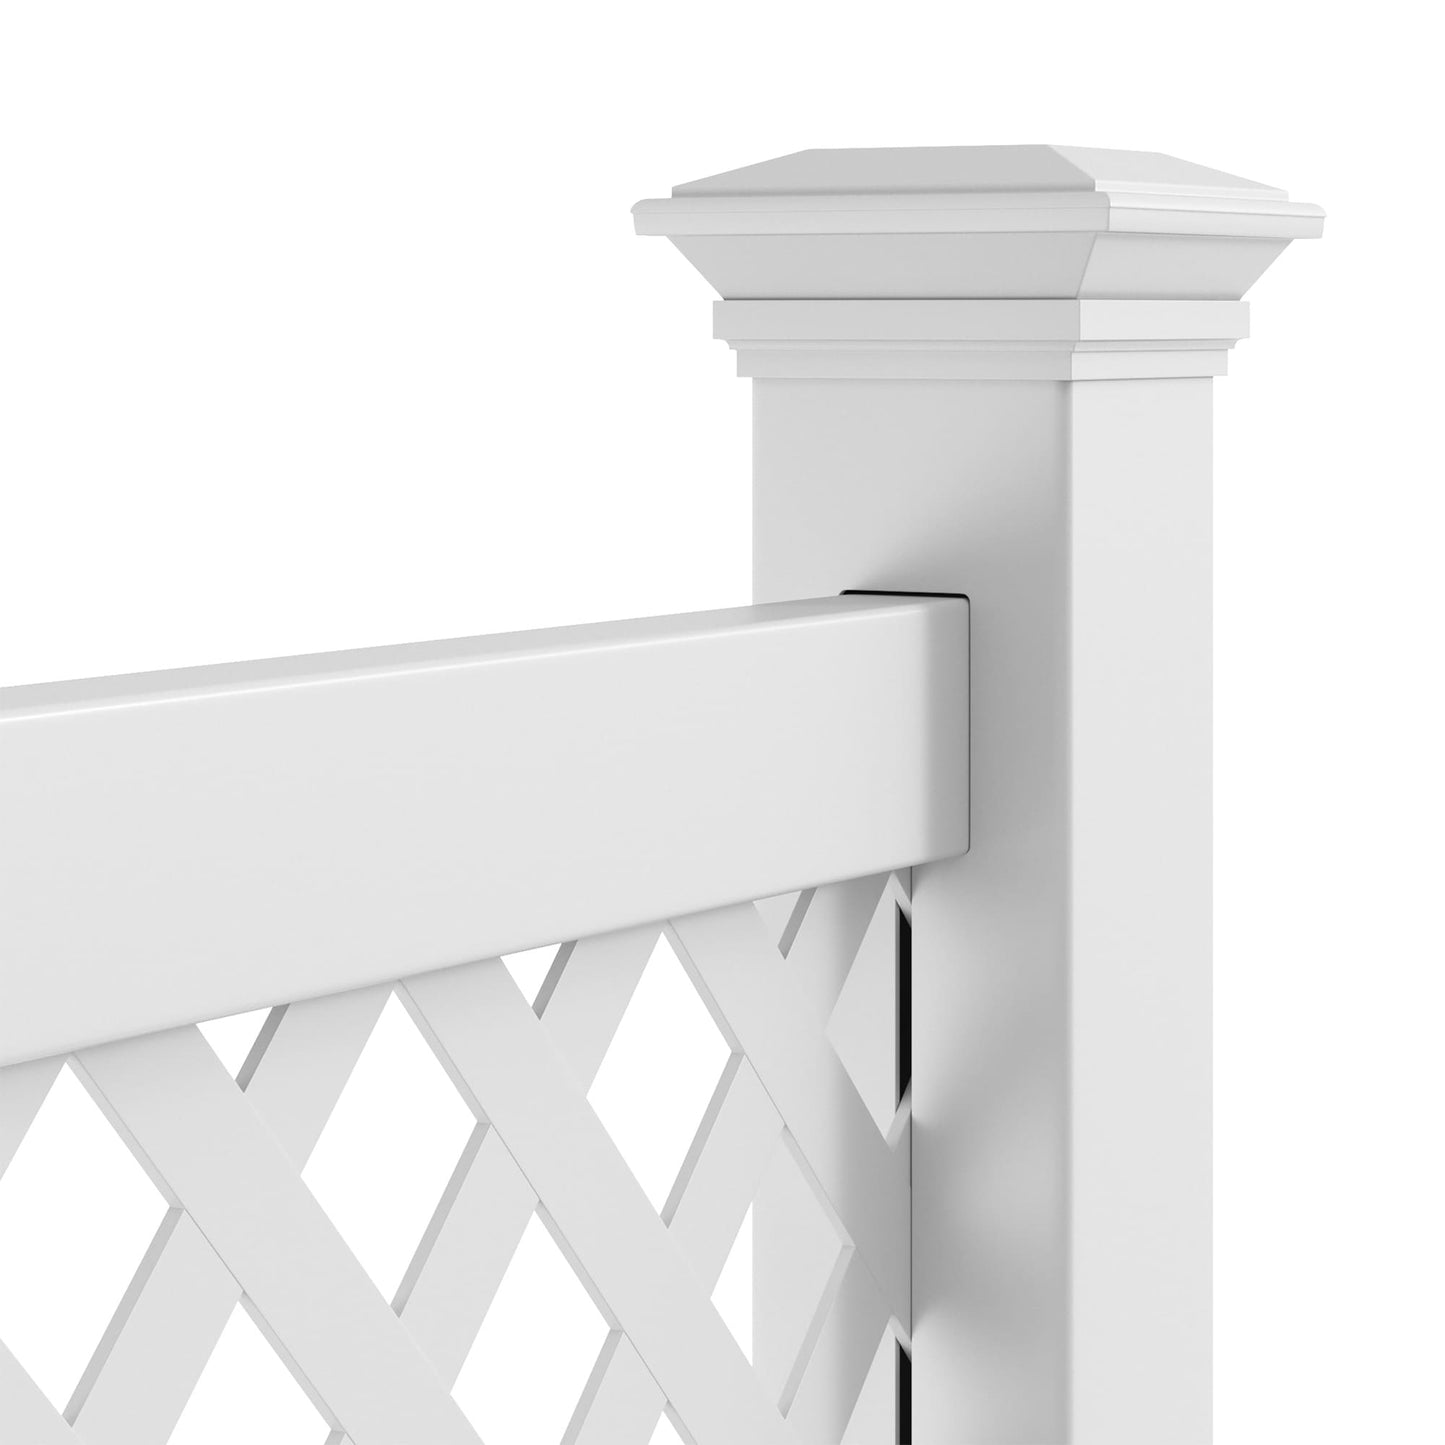 Arrowwood Home Series - Fence Panel - 6' x 8'-Vinyl Fence Panels-ActiveYards-FenceCenter